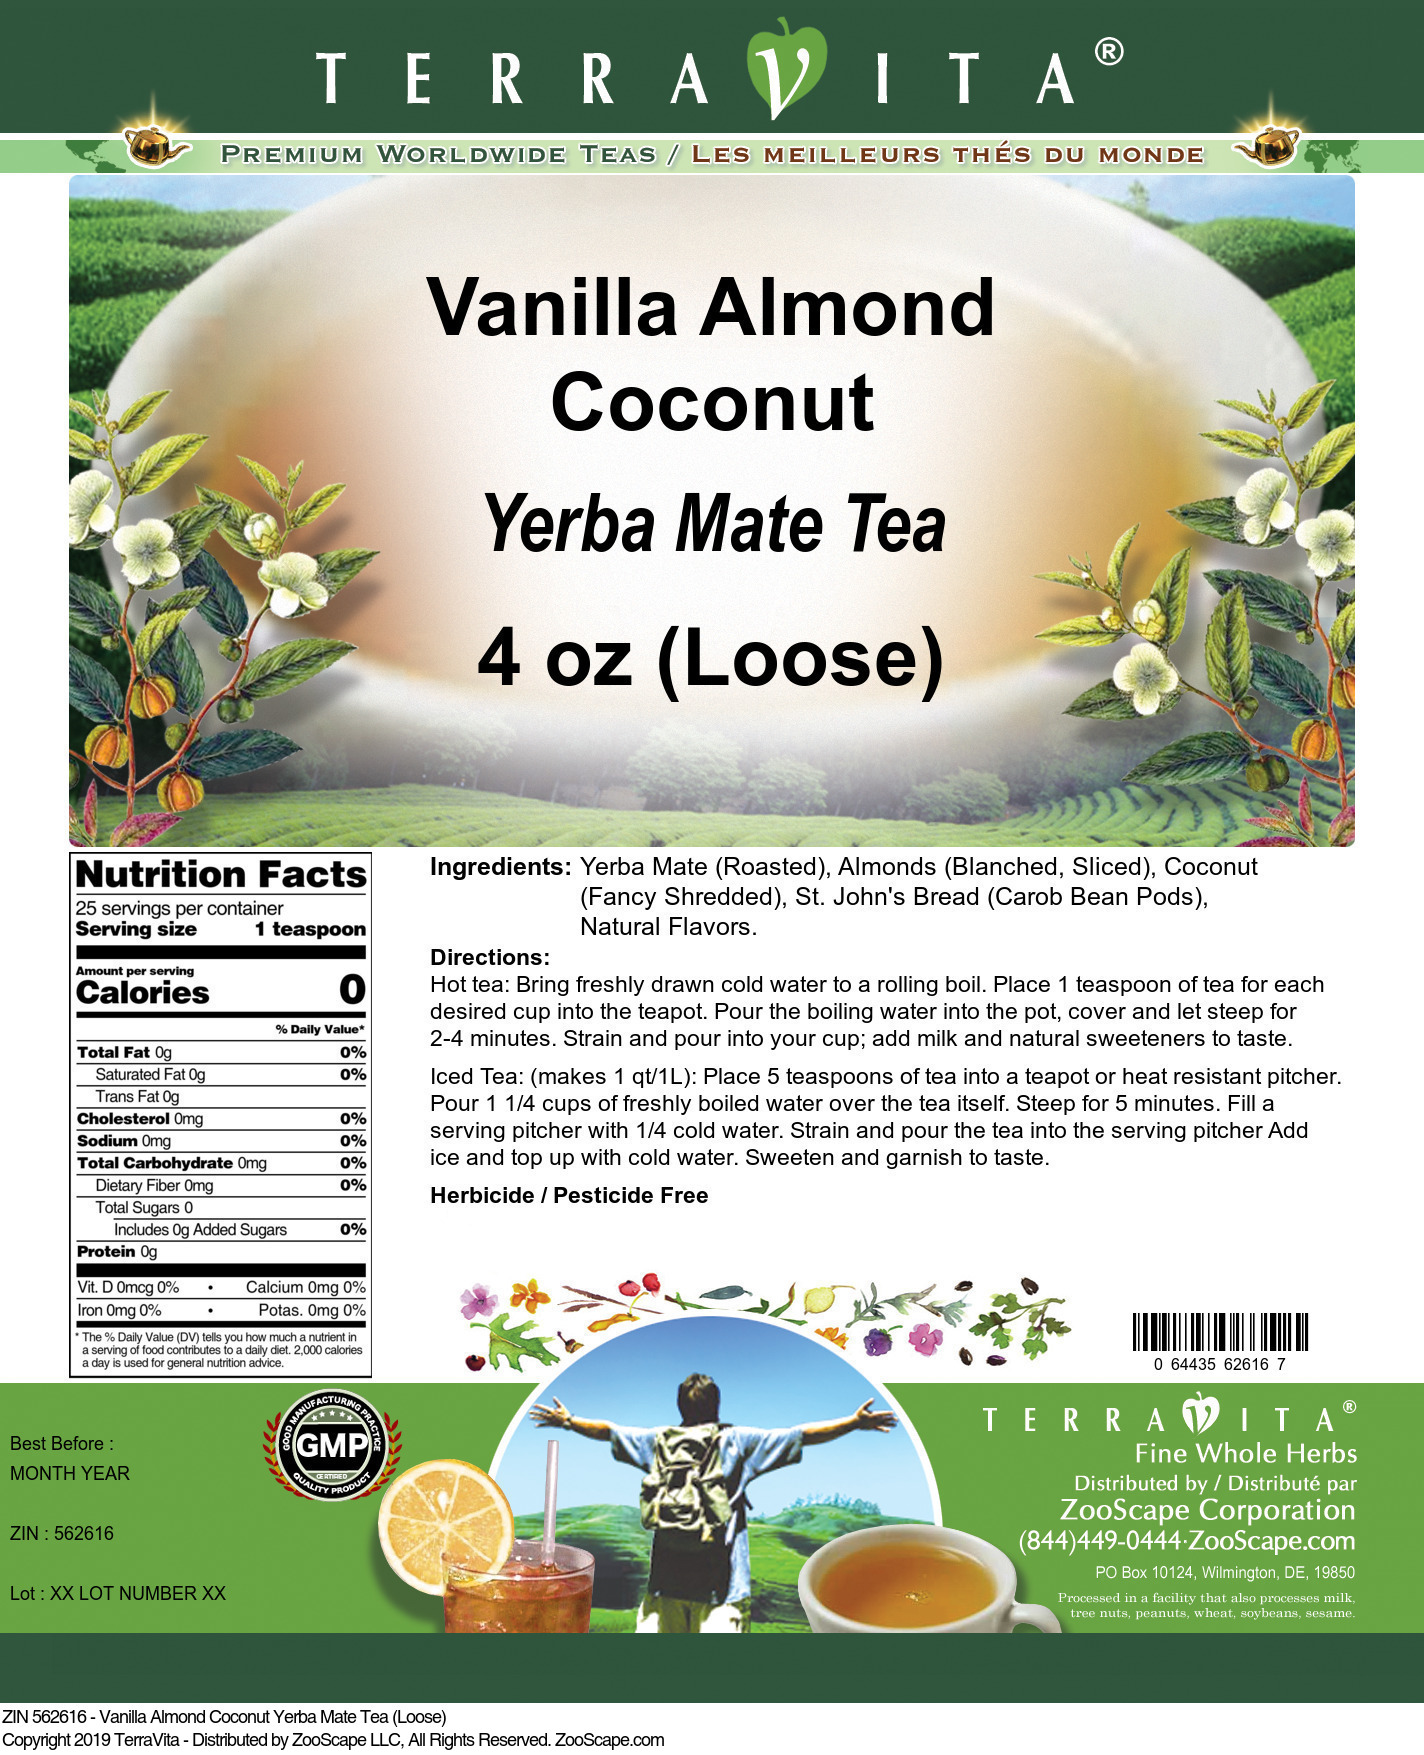 Vanilla Almond Coconut Yerba Mate Tea (Loose) - Label